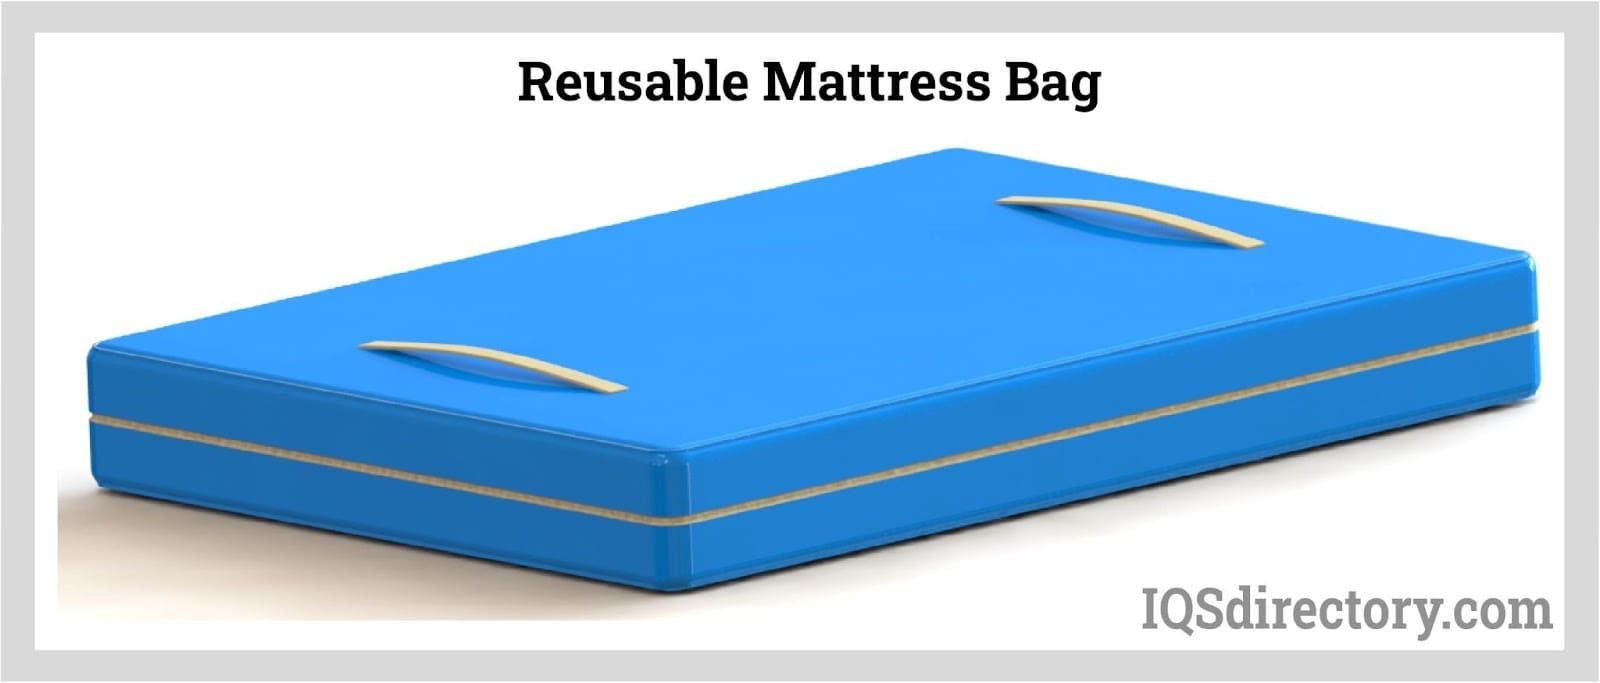 https://www.iqsdirectory.com/articles/plastic-bag/mattress-bags/resuable-mattress-bag.jpg